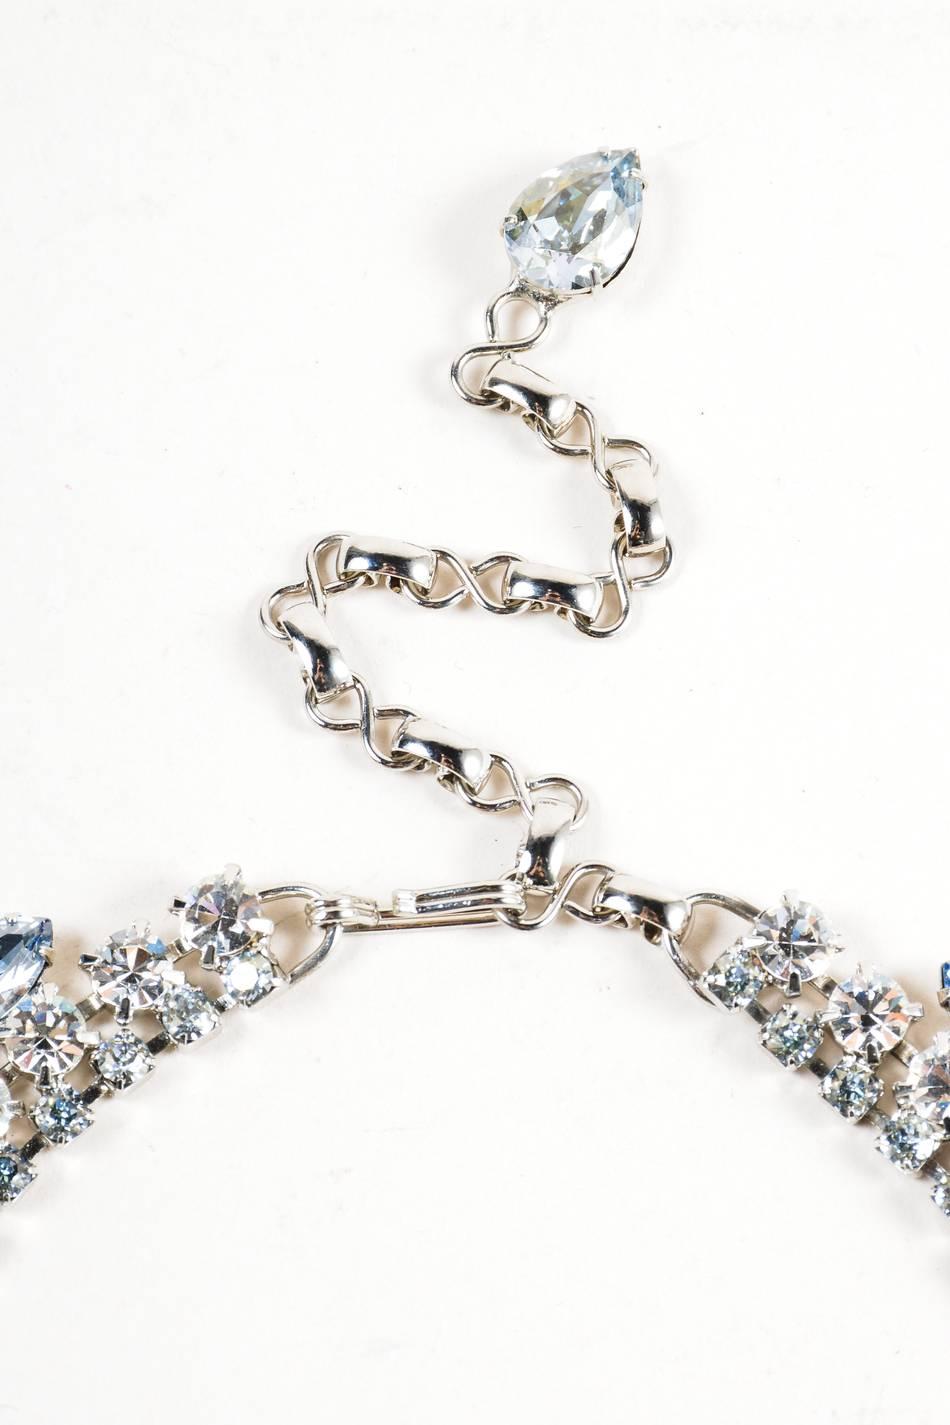 Thorin & Co. Silver Tone Blue Glass Rhinestone Statement Bib Necklace For Sale 1